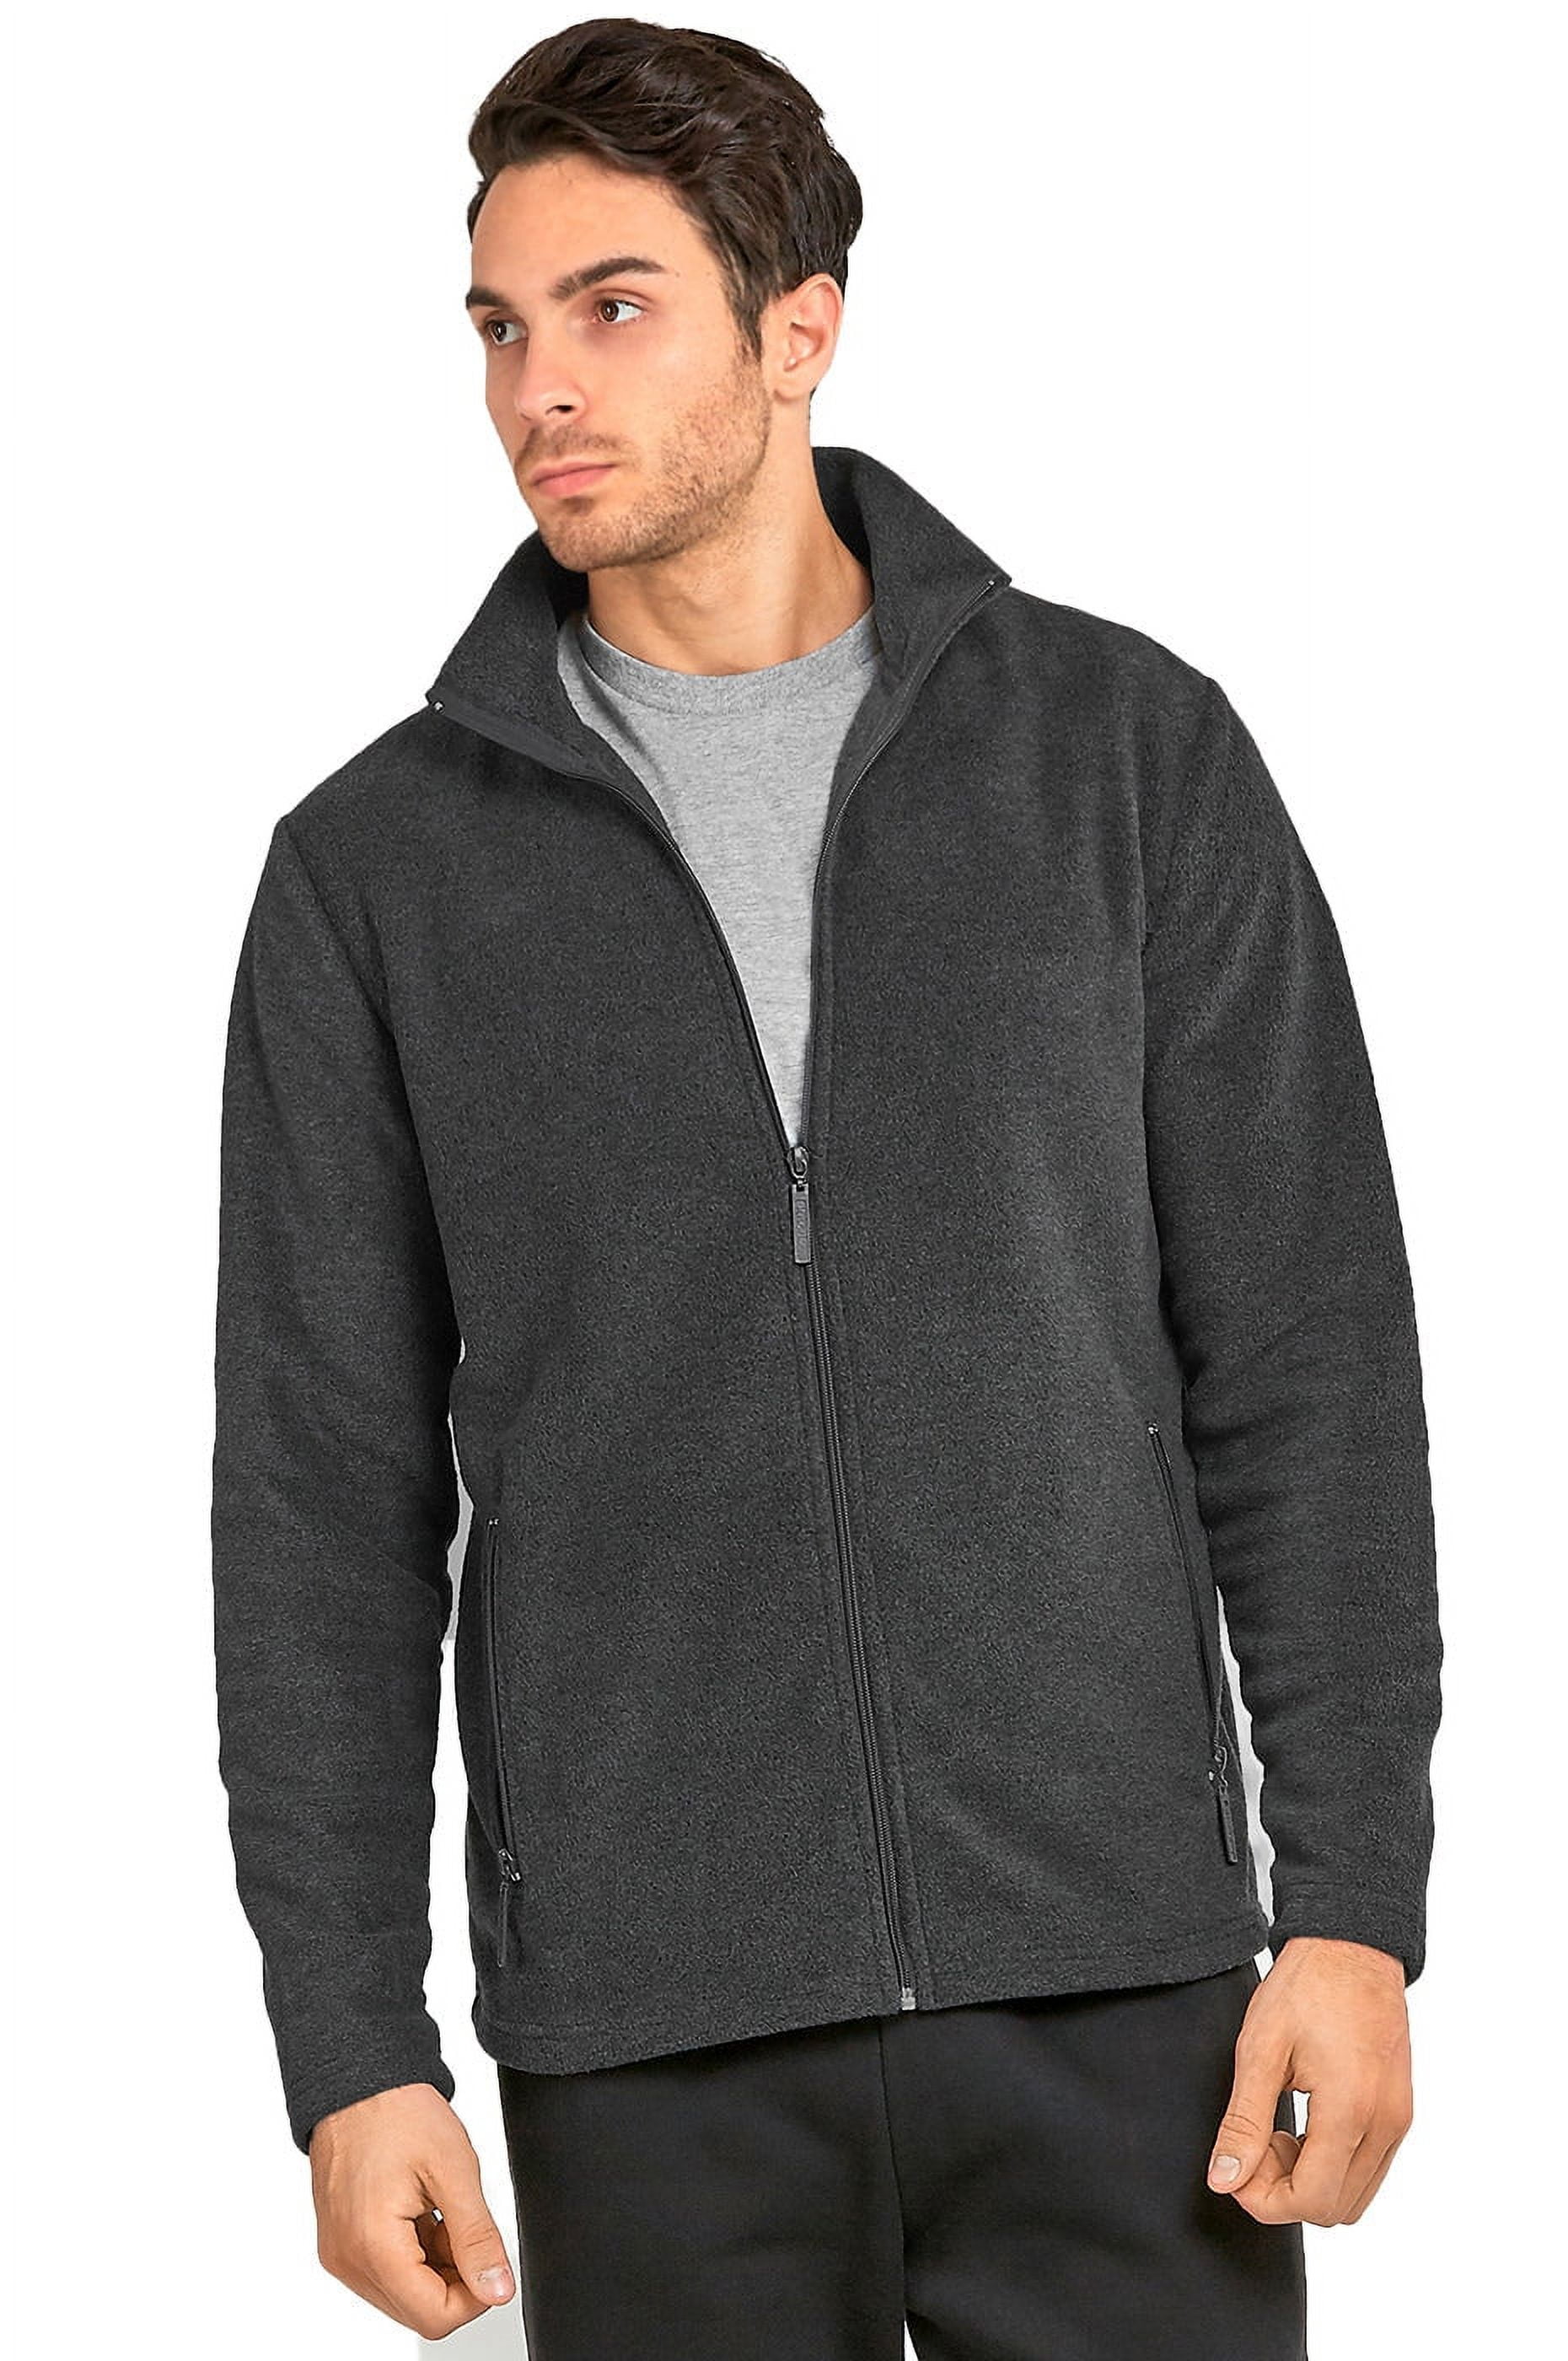 Knocker Men's Soft Fleece Full Zip Up Mid-Weight Winter Warm Sweater ...